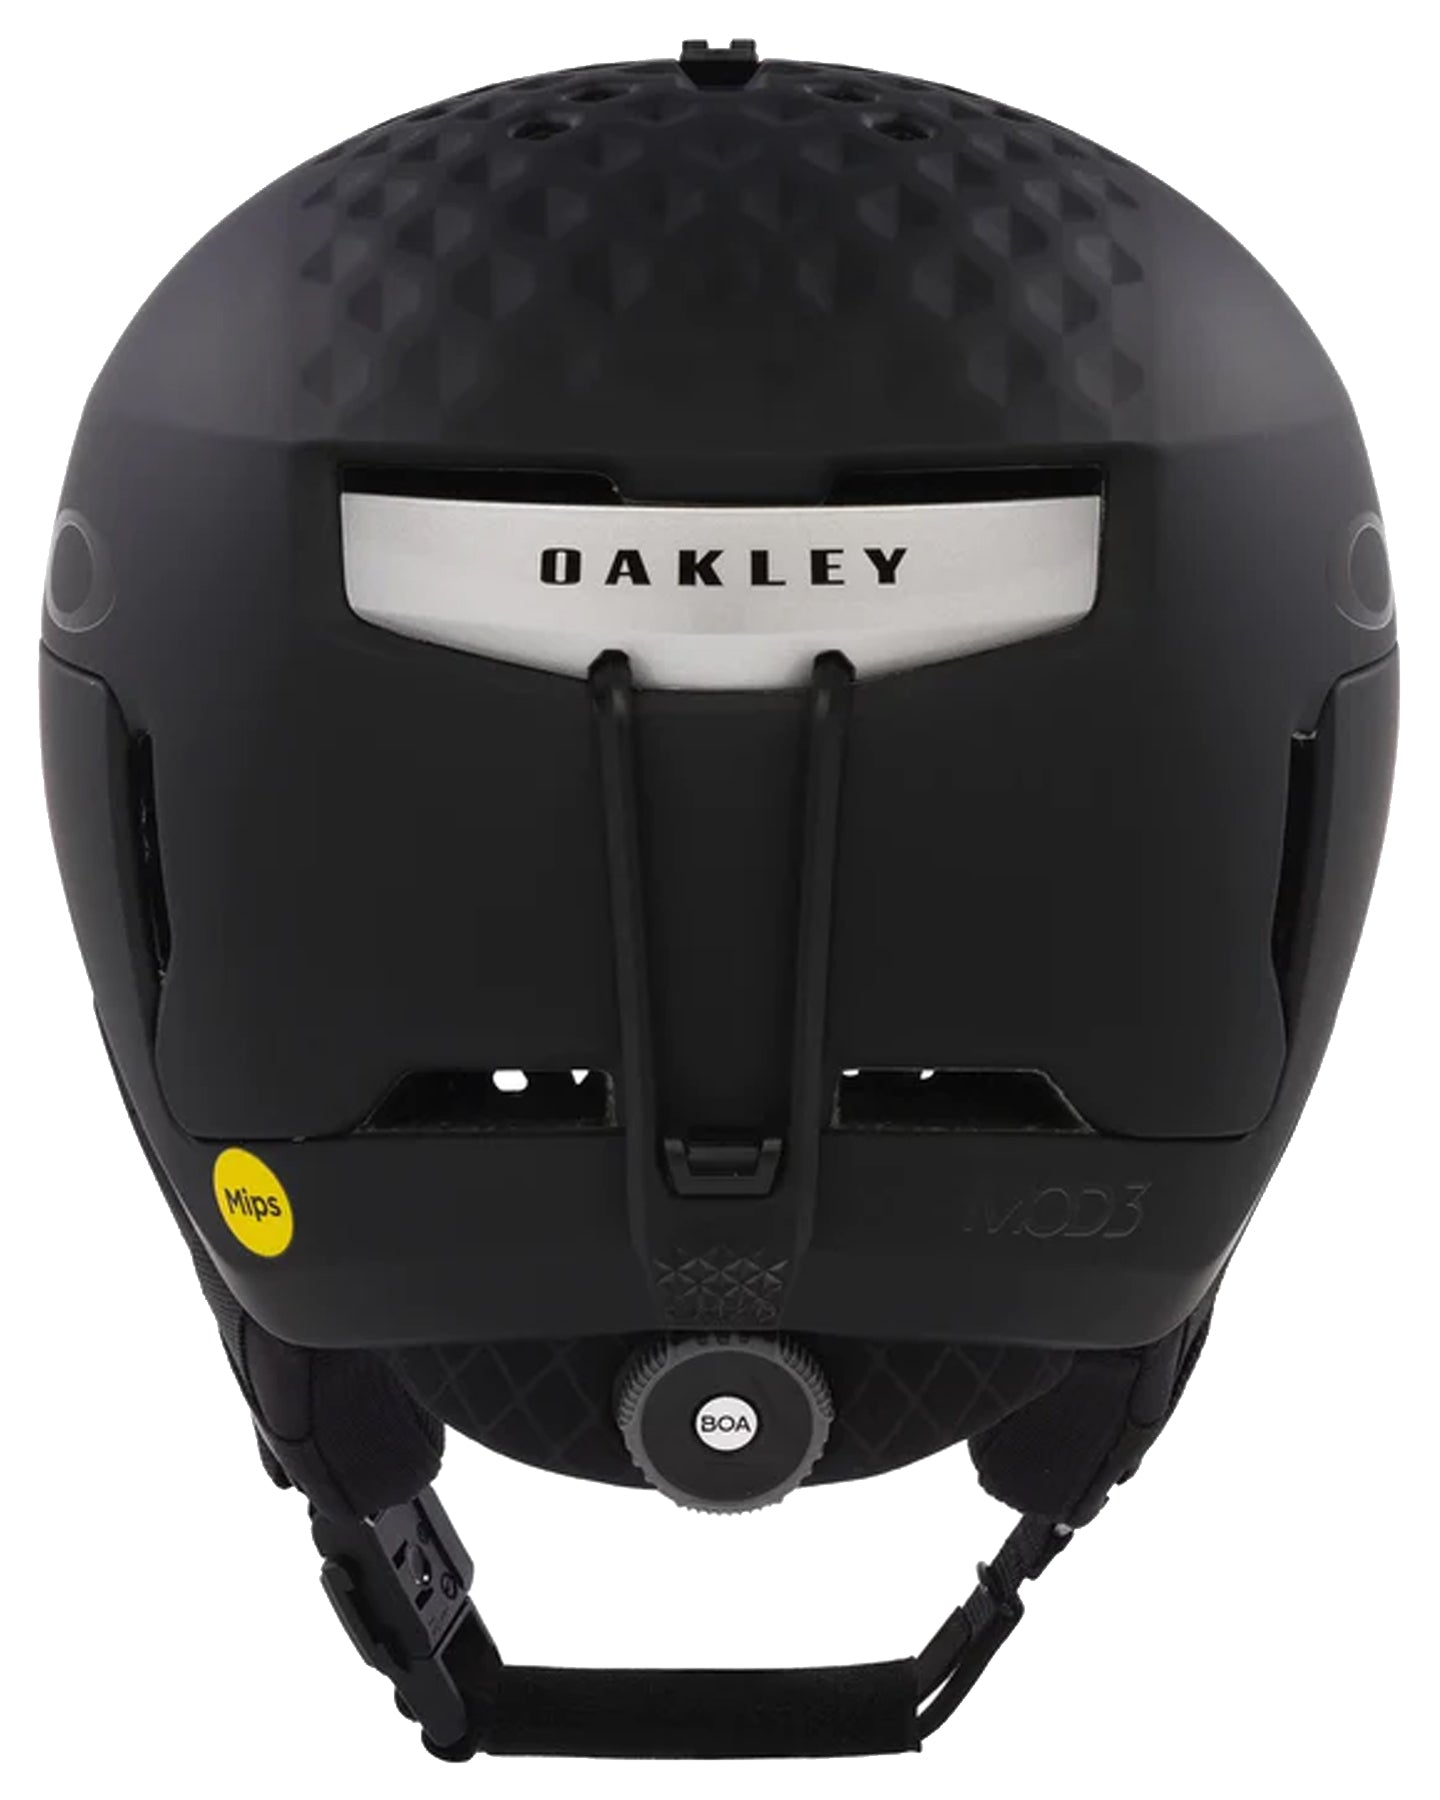 Oakley Mod3 Snow Helmet - Matte Blackout Men's Snow Helmets - Trojan Wake Ski Snow